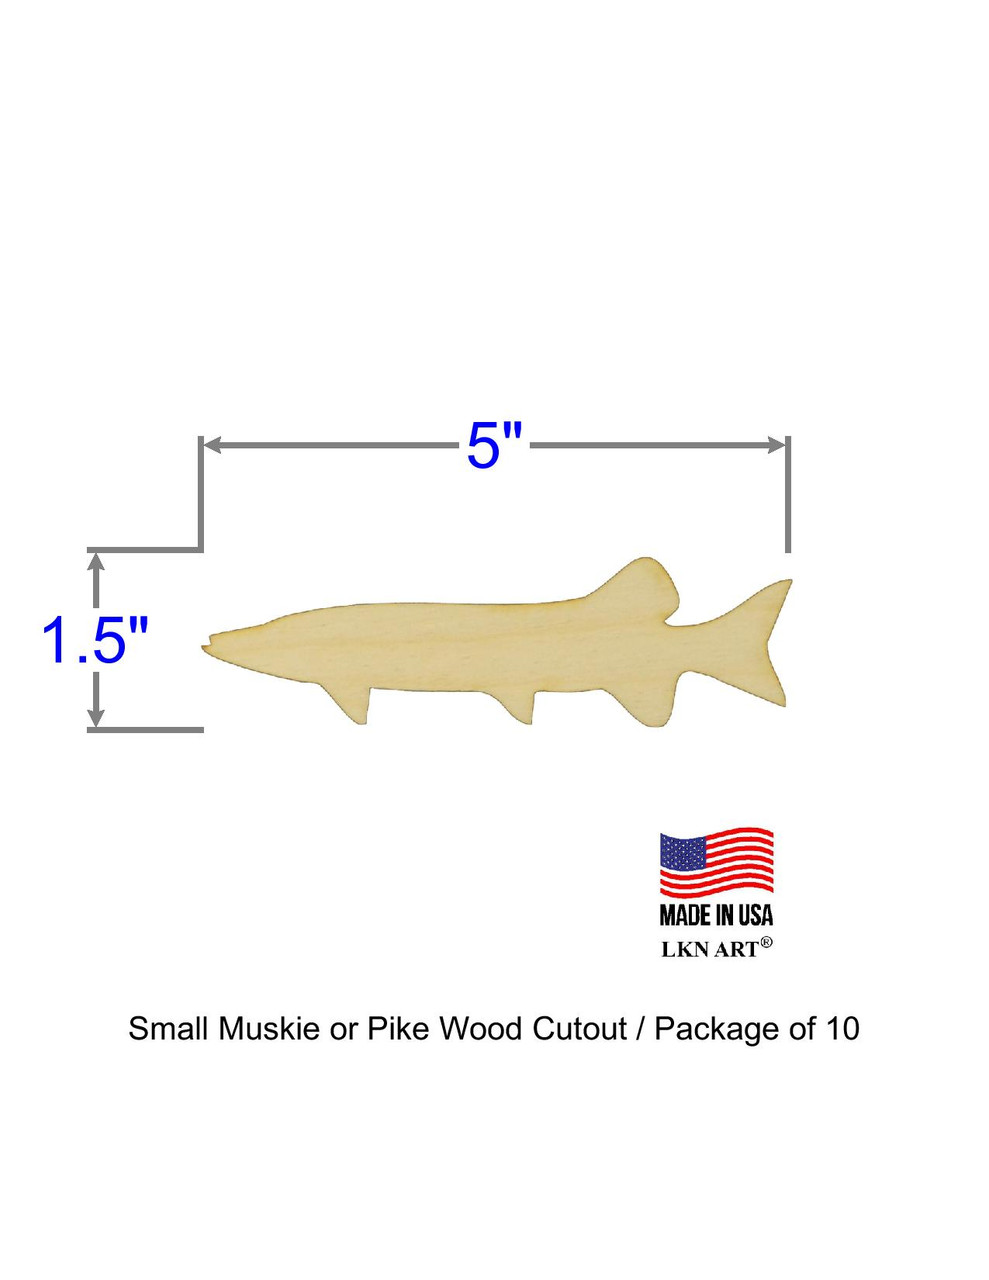 Muskie or Pike Wood Cutout - Jumbo 18 x 5.75 1/8 Baltic Birch Plywood